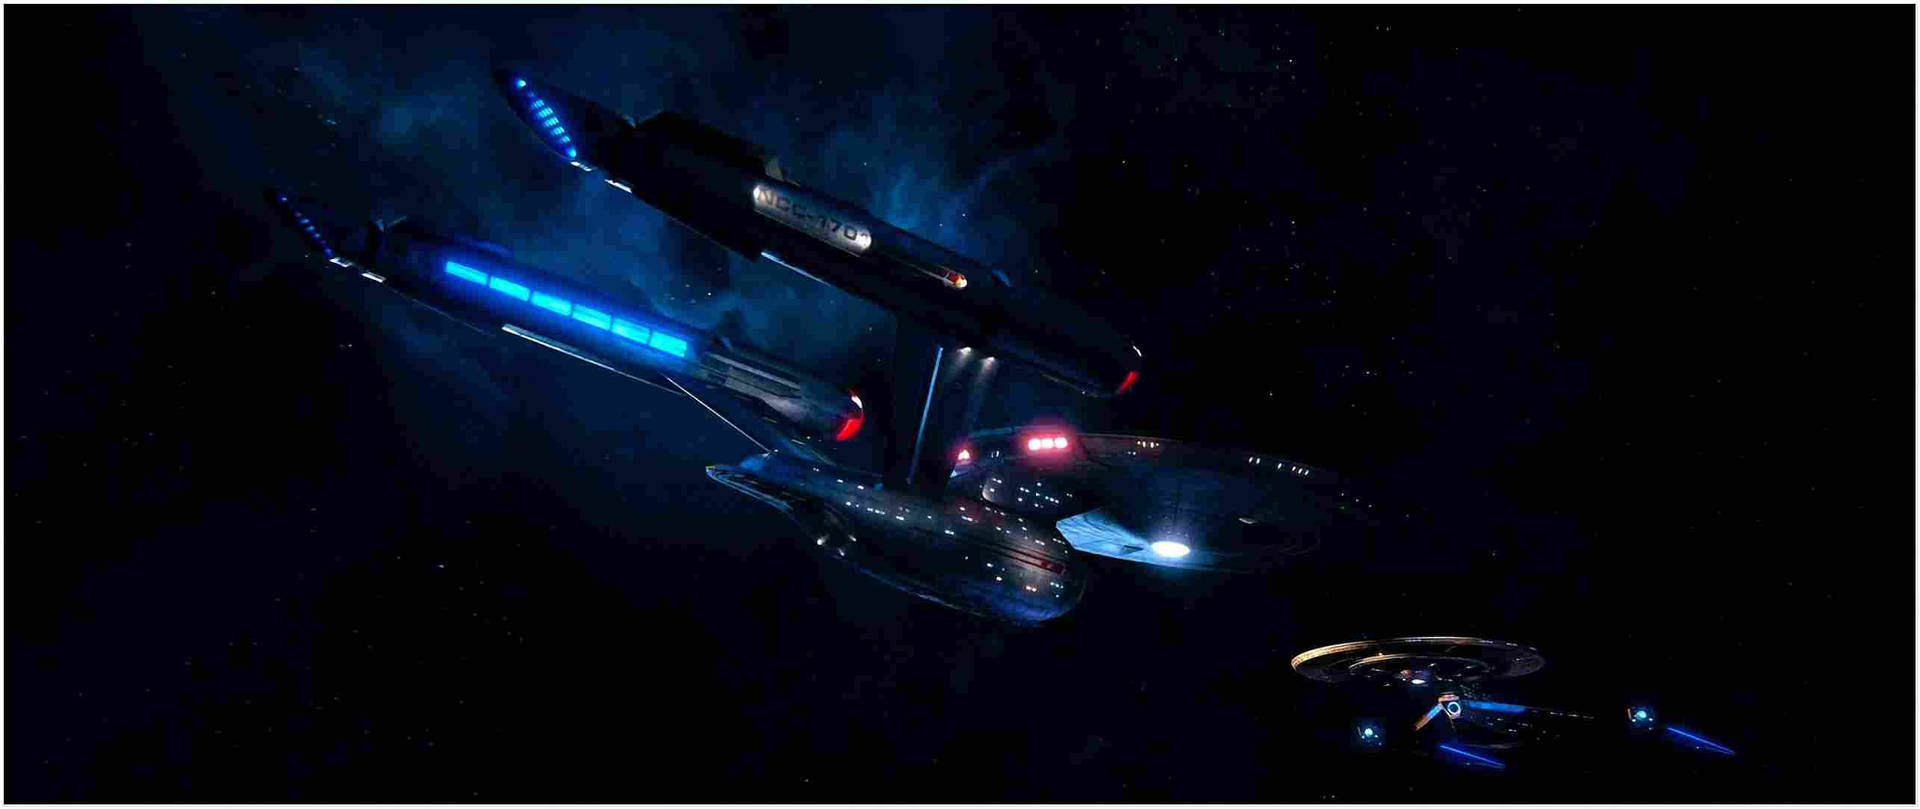 Star Trek Discovery Wallpaper